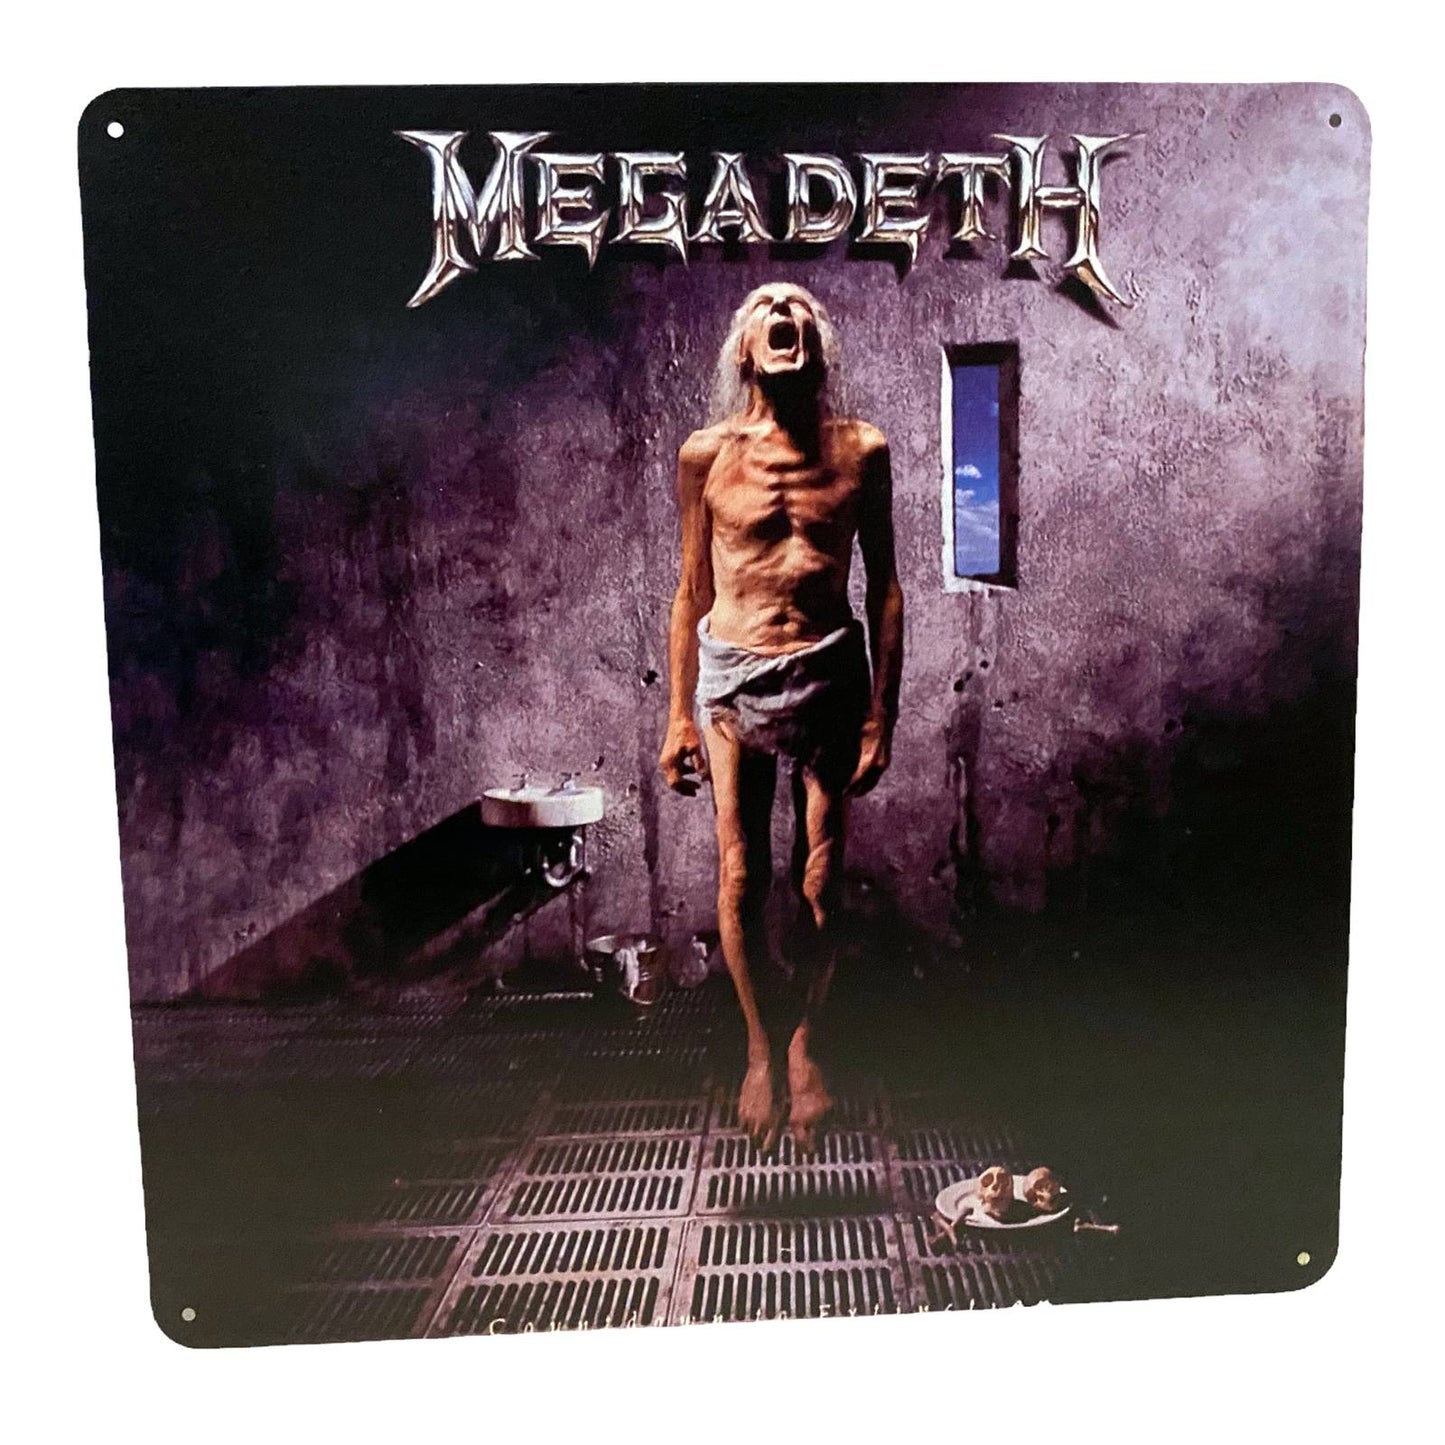 Megadeath - Countdown to Extinction Album Cover Metal Print Tin Sign 12"x 12"